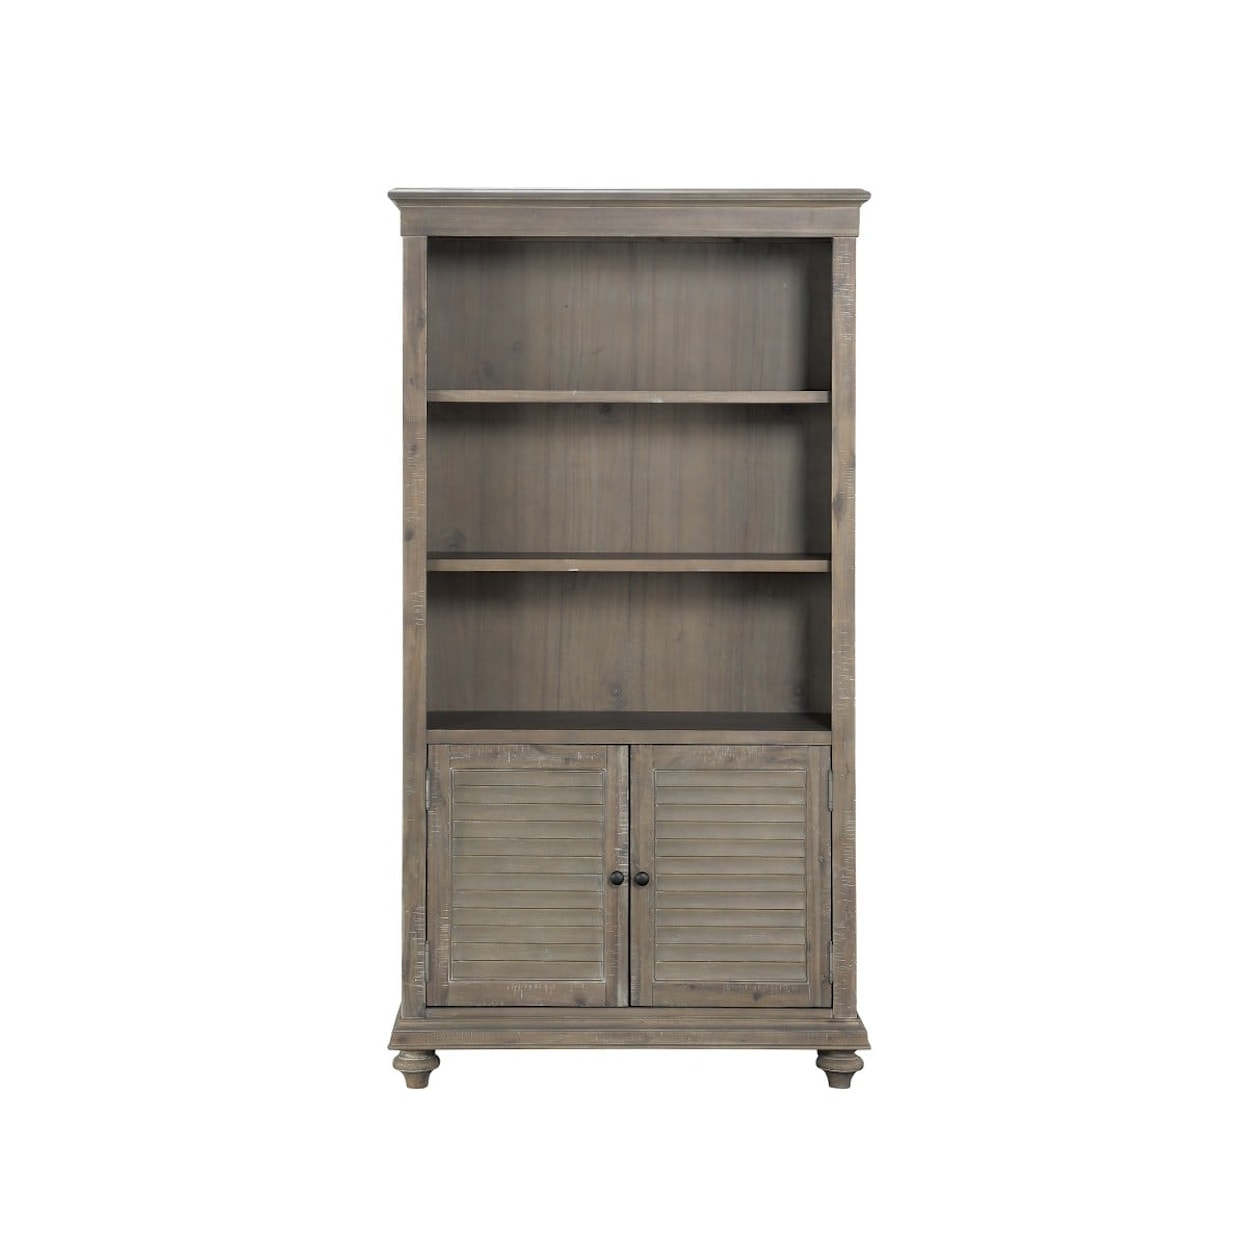 Homelegance Cardano 3-Shelf Bookcase